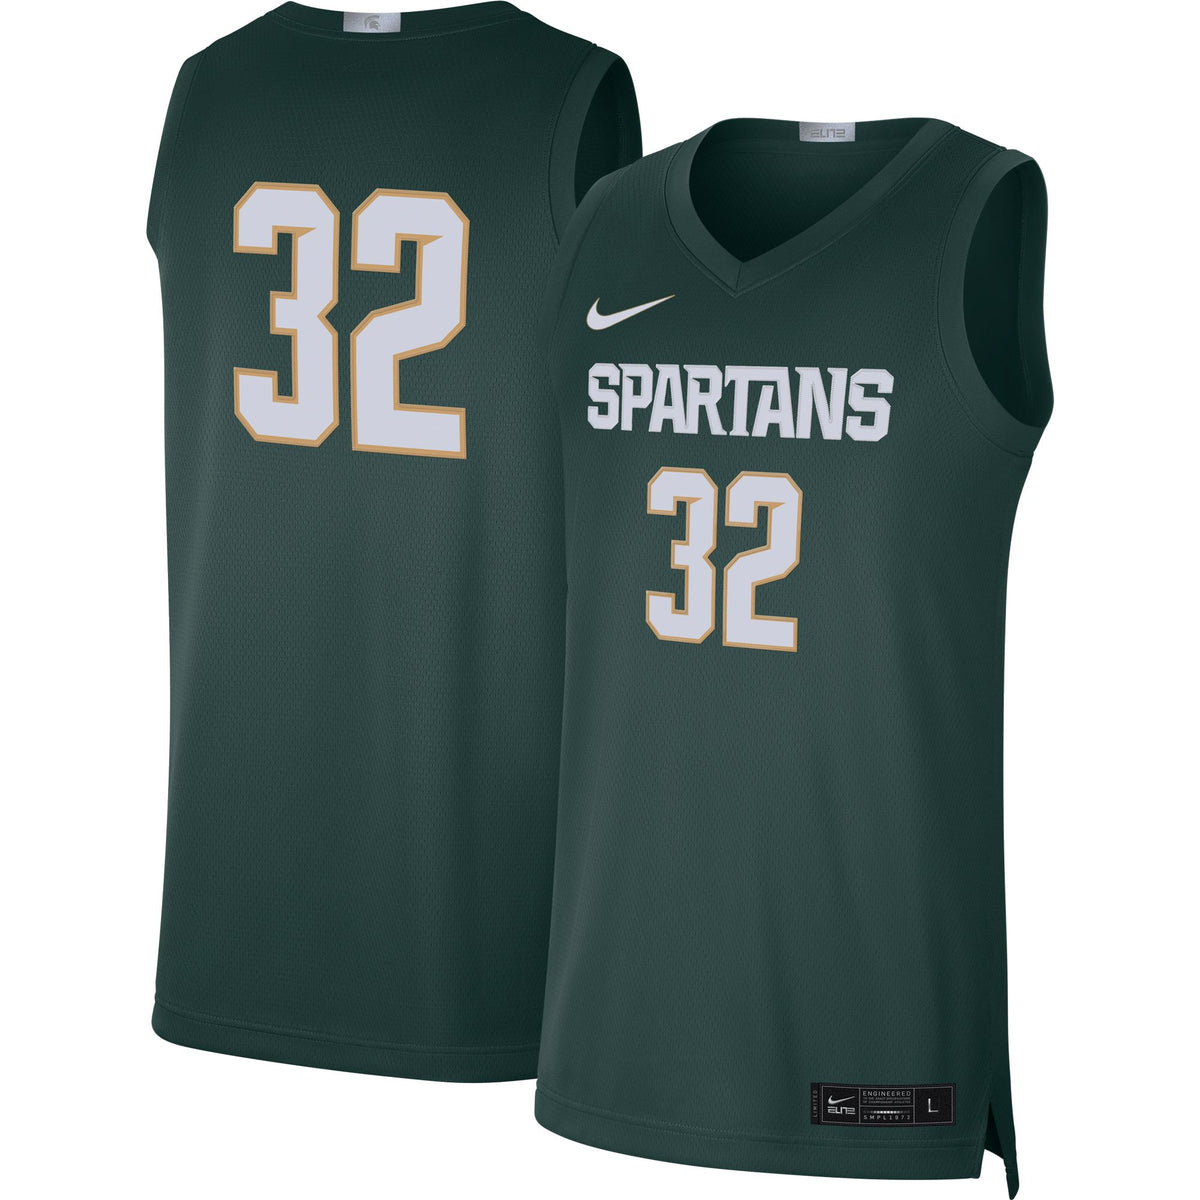 Men's Green USC Upstate Spartans Basketball Jersey